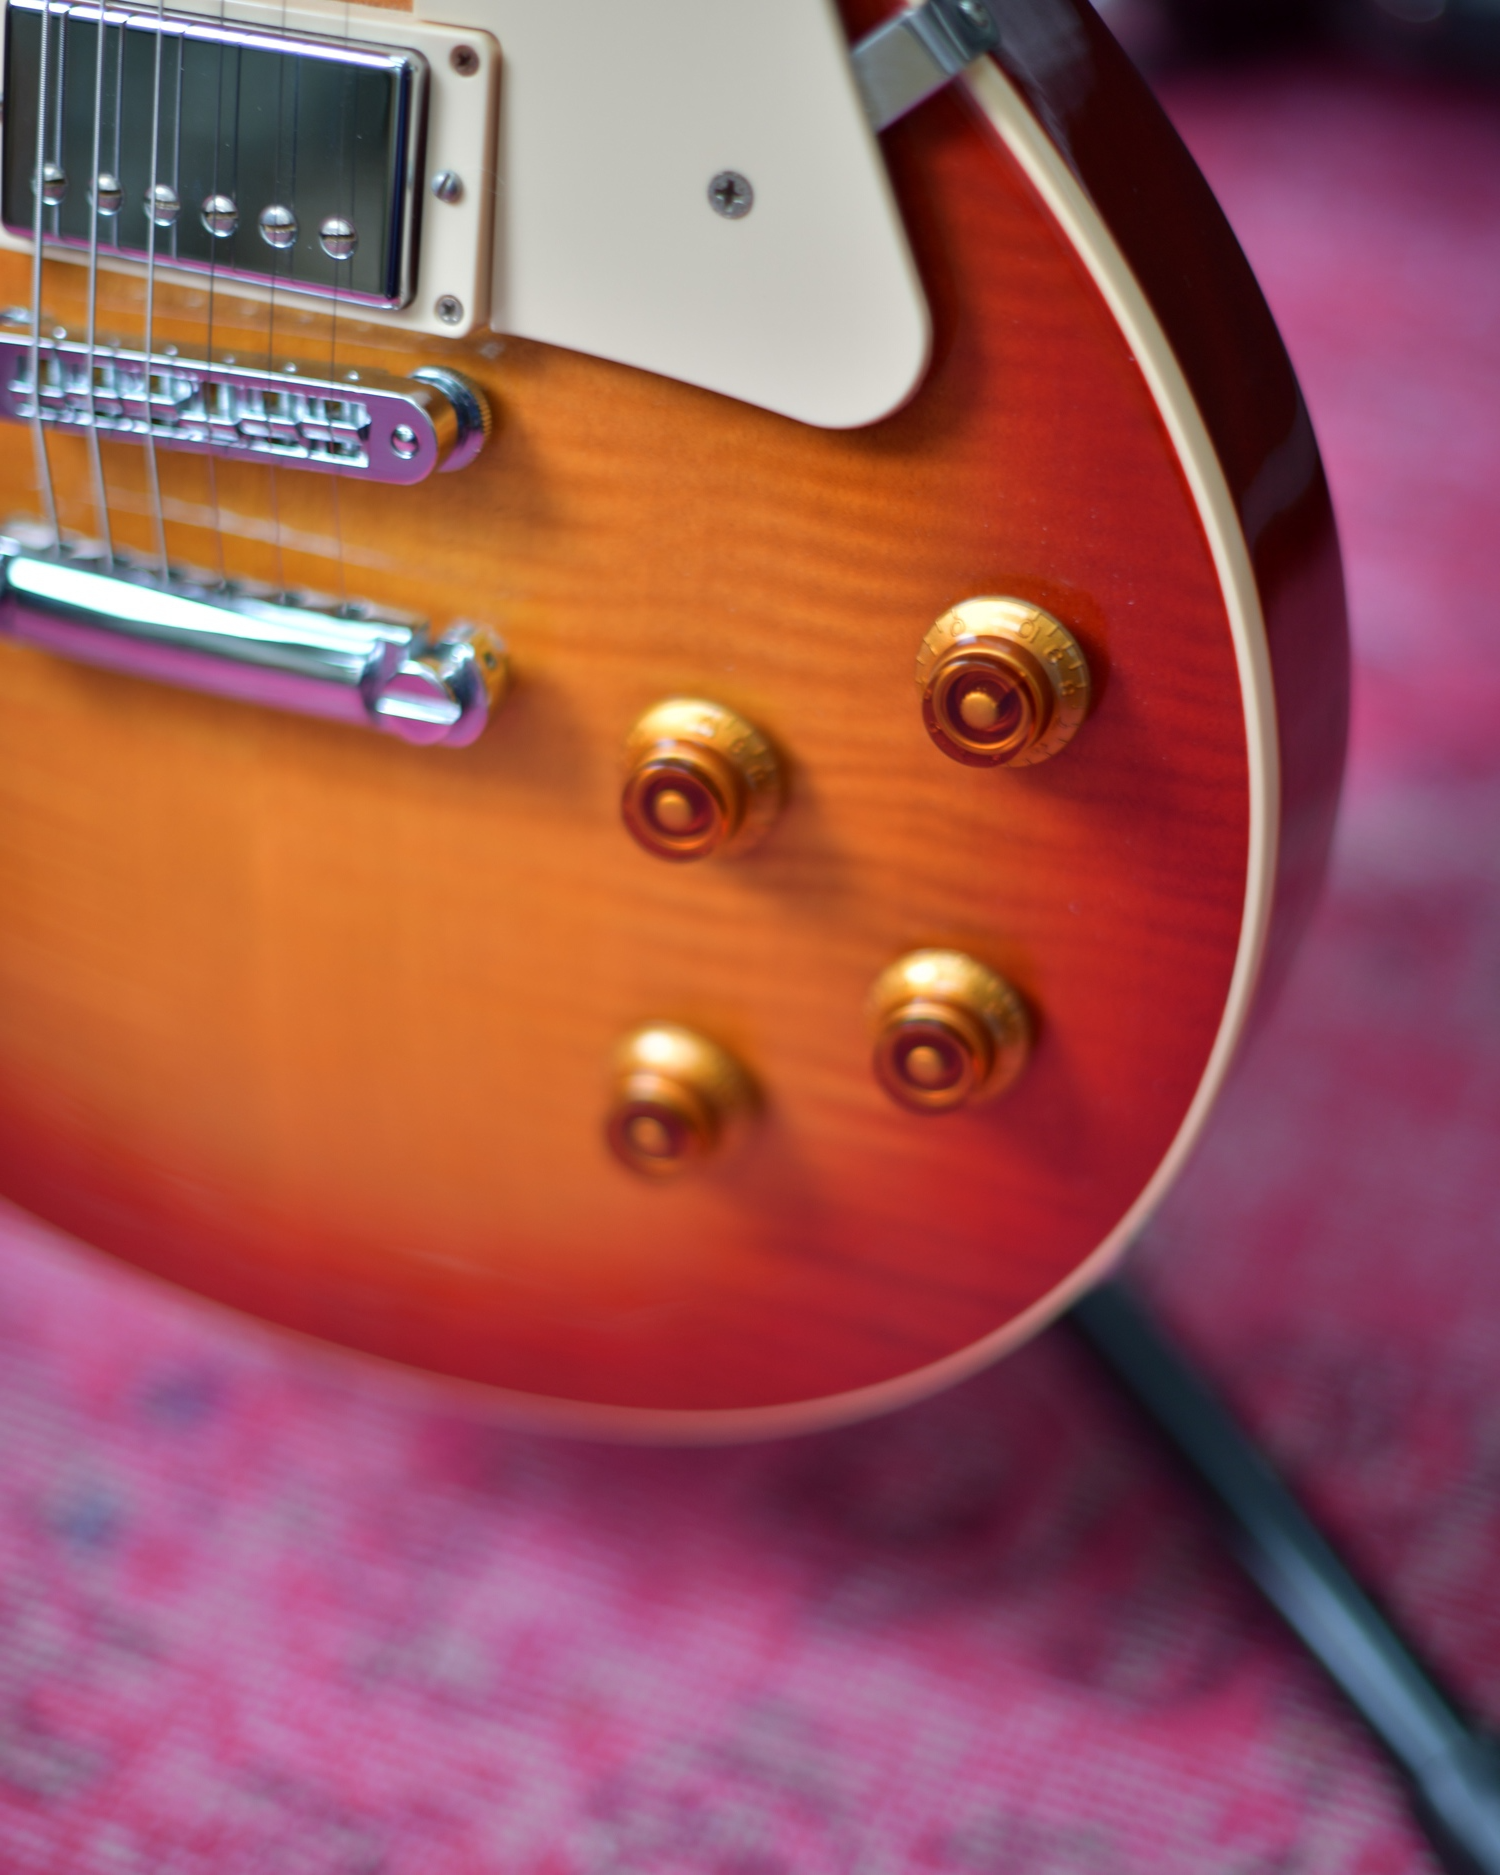 Gibson Les Paul Standard Plus Cherry Sunburst 2013